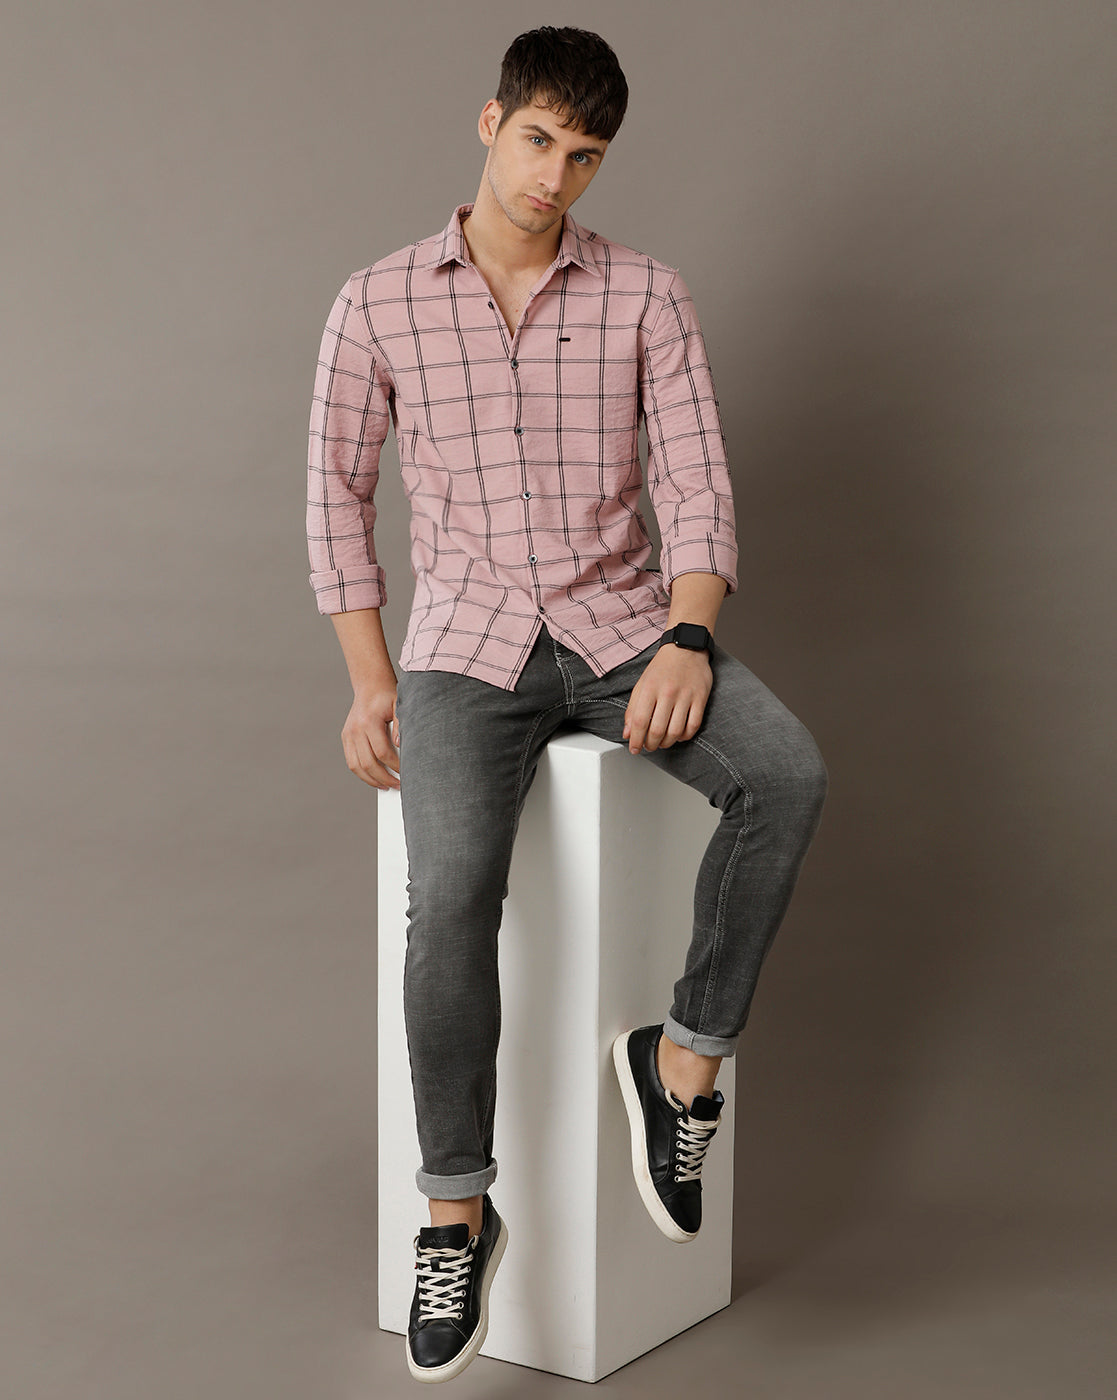 IDENTITI Men Slim Fit Regular Collar Checks Shirt In Pink.